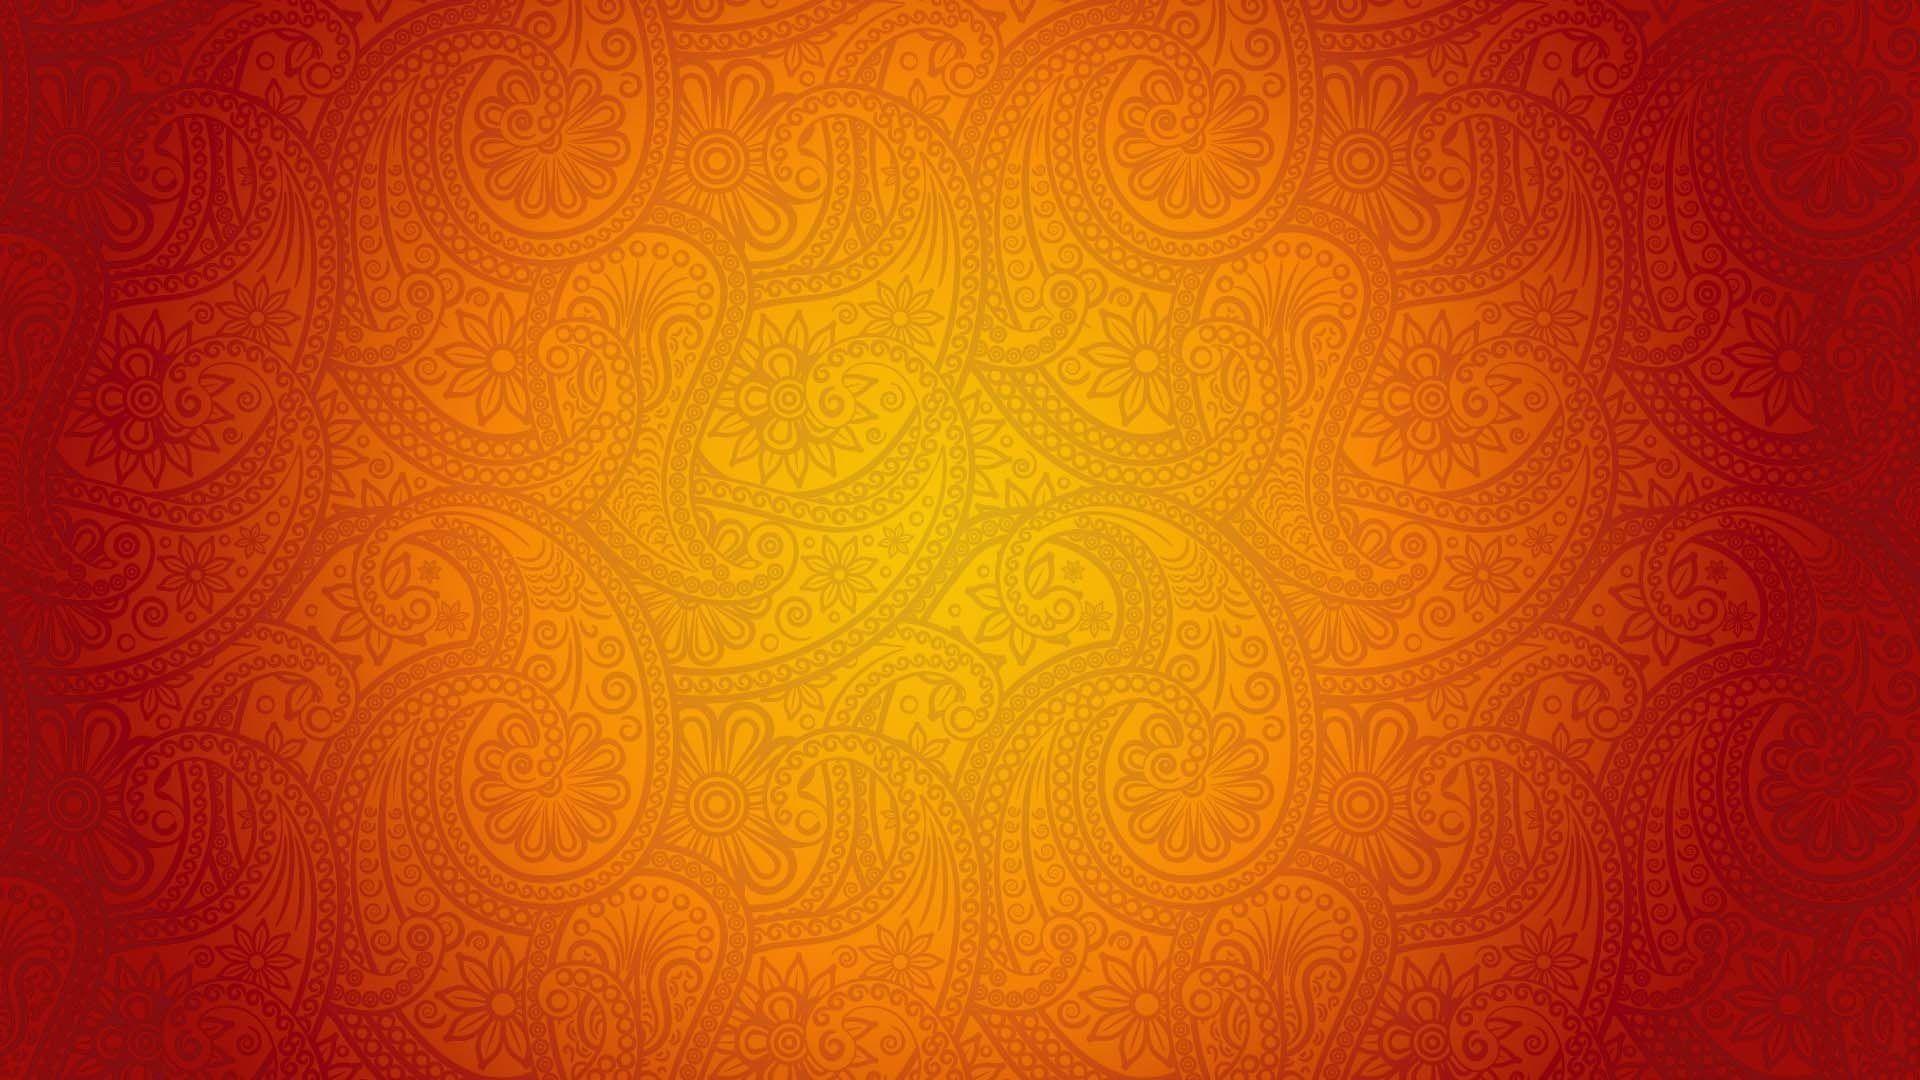 Orange Abstract Images  Free Download on Freepik